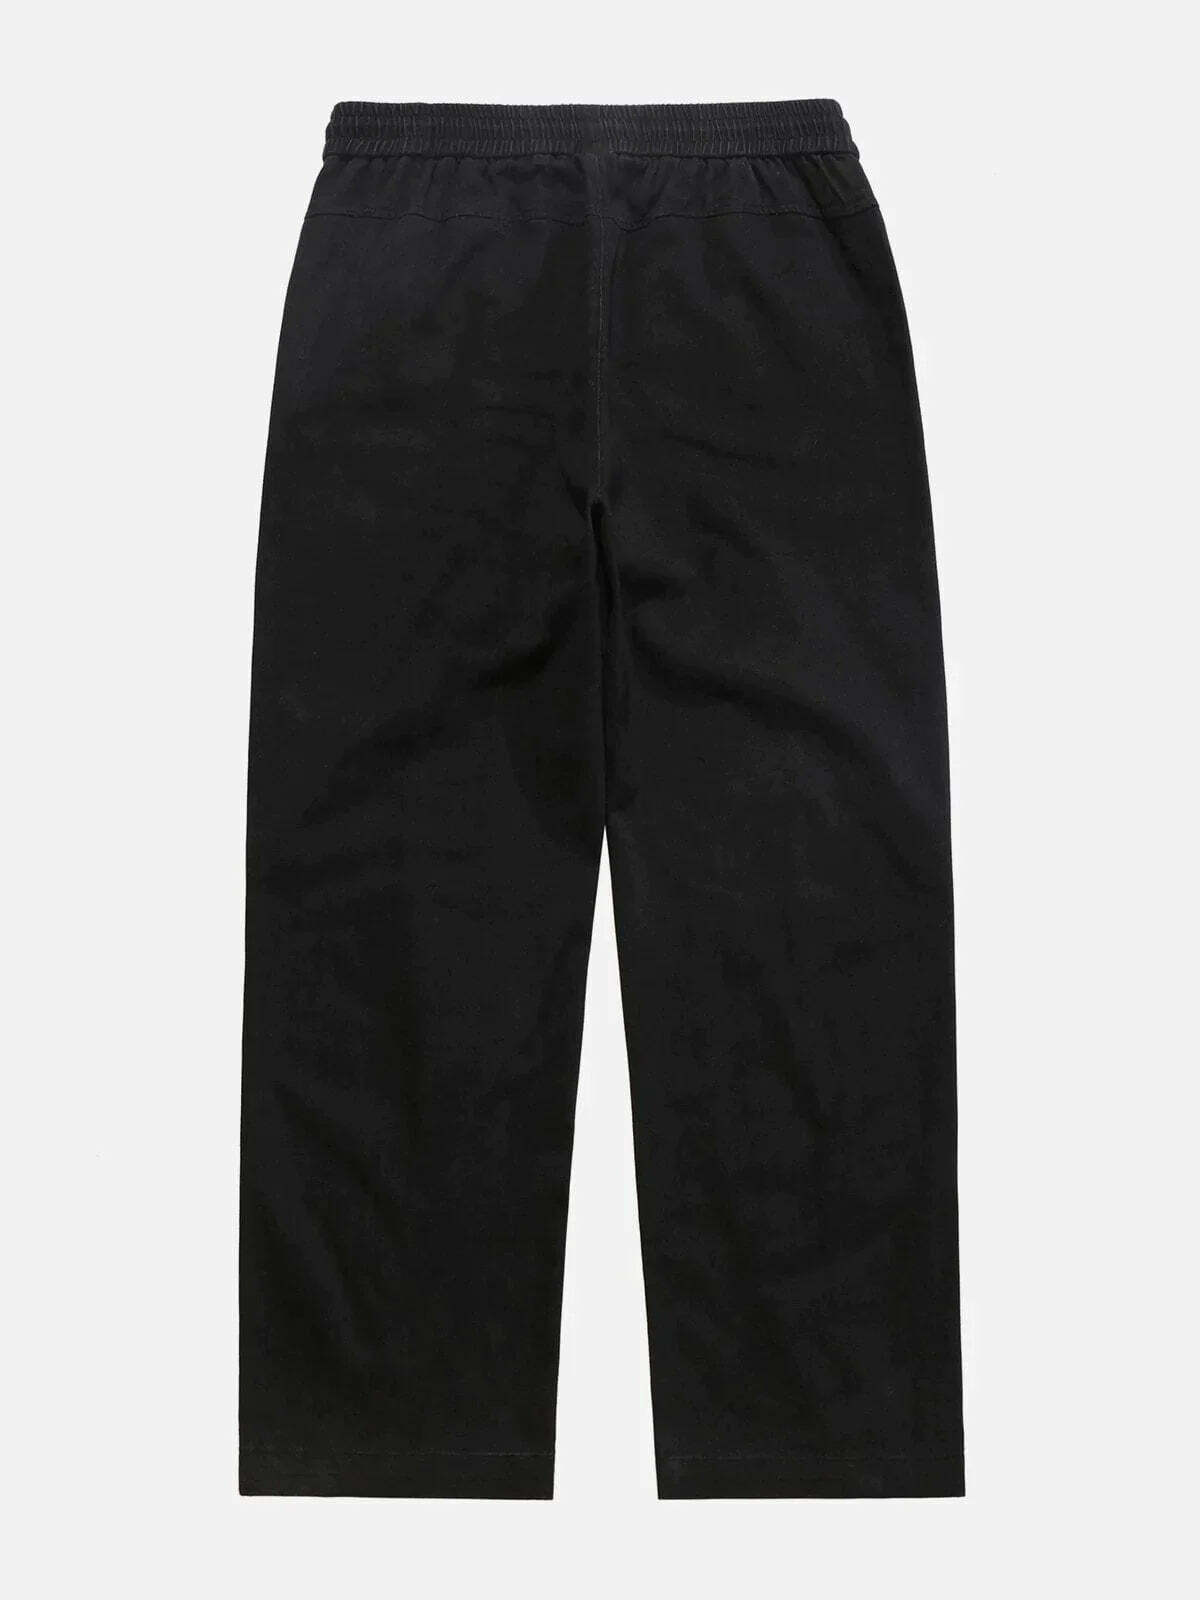 zipperembellished cargo pants edgy streetwear essential 2855